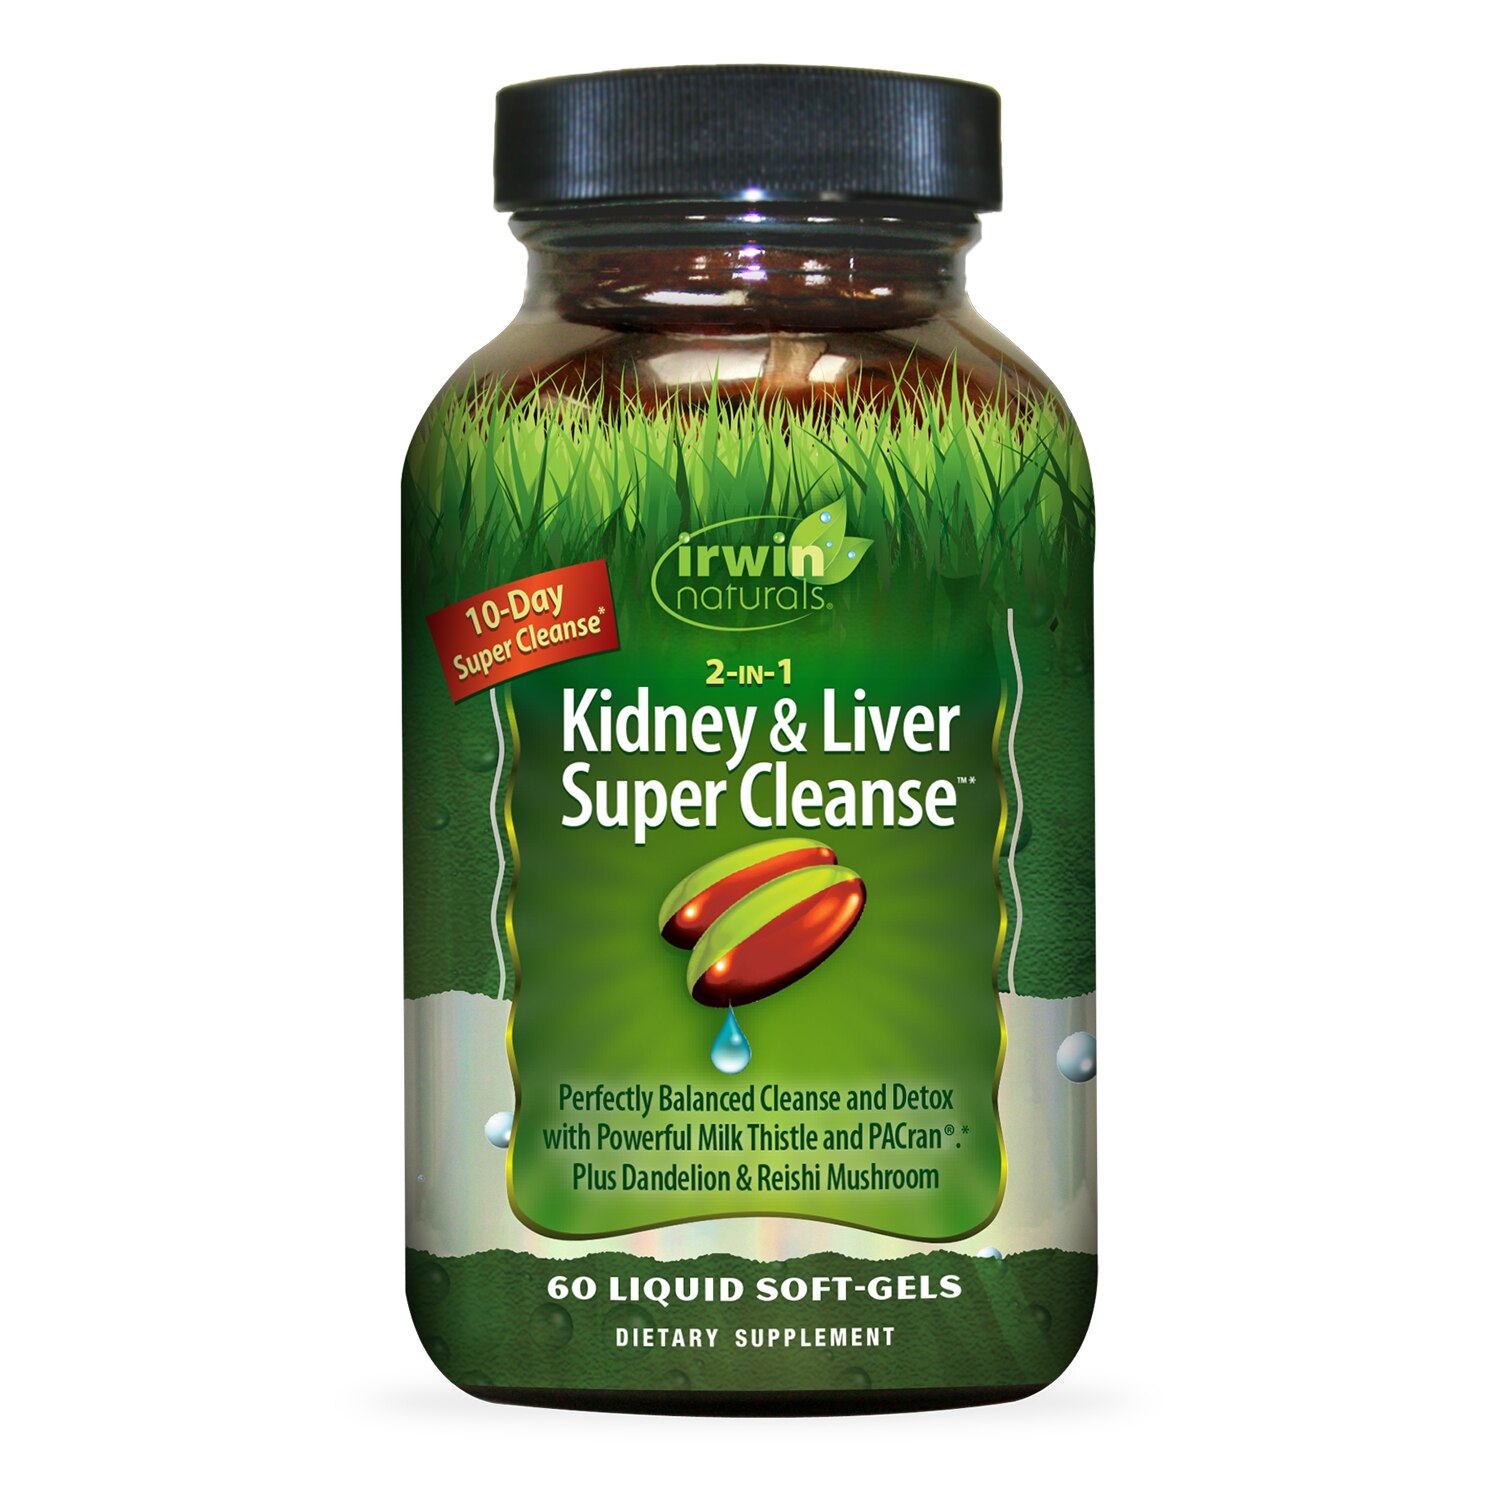 Irwin Naturals 2-in-1 Kidney & Liver Super Cleanse